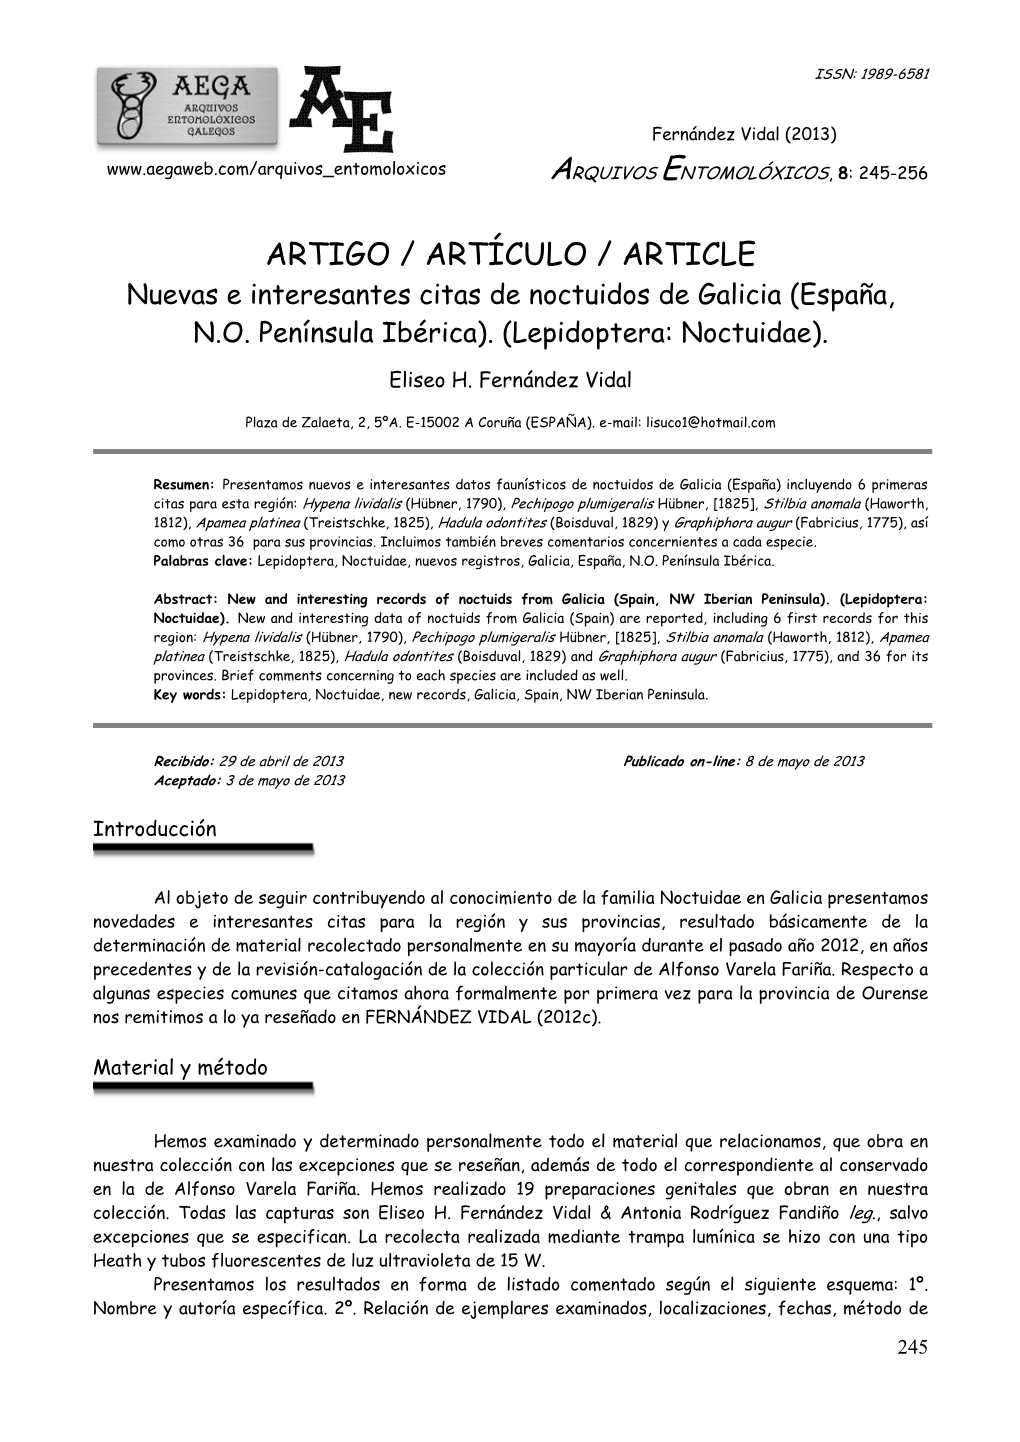 ARTIGO / ARTÍCULO / ARTICLE Nuevas E Interesantes Citas De Noctuidos De Galicia (España, N.O